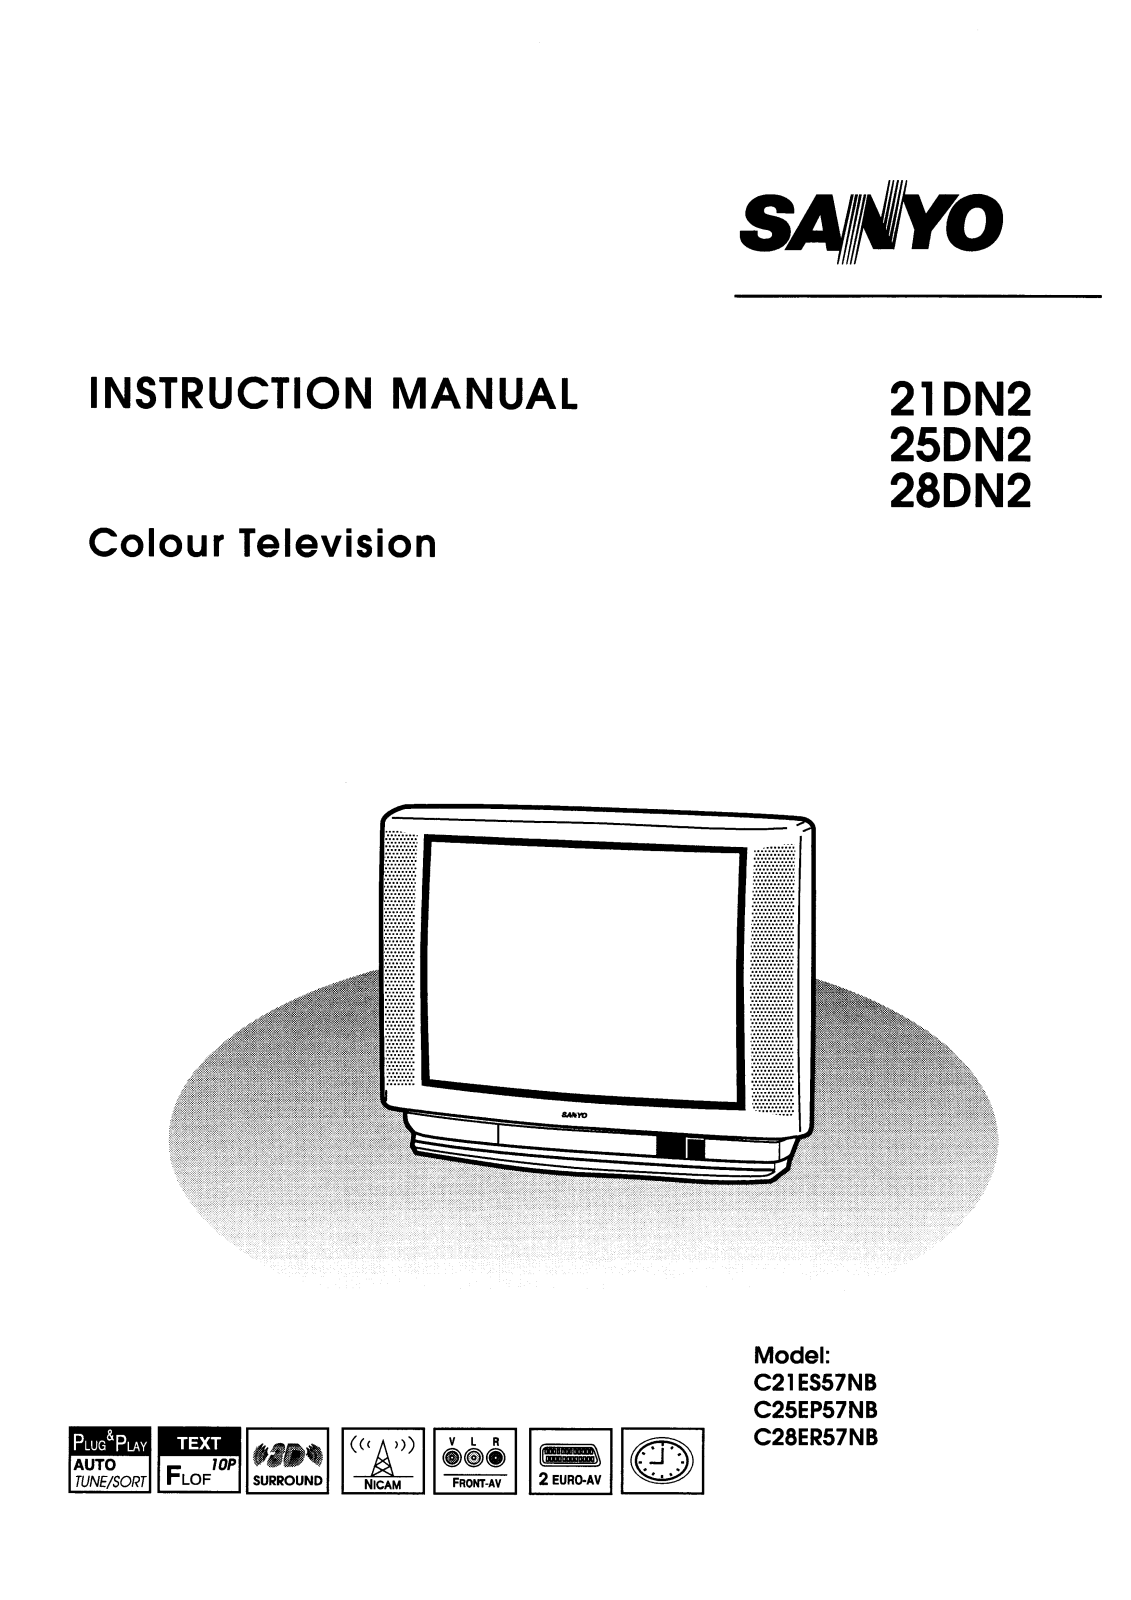 Sanyo 21DN2, 25DN2 Instruction Manual